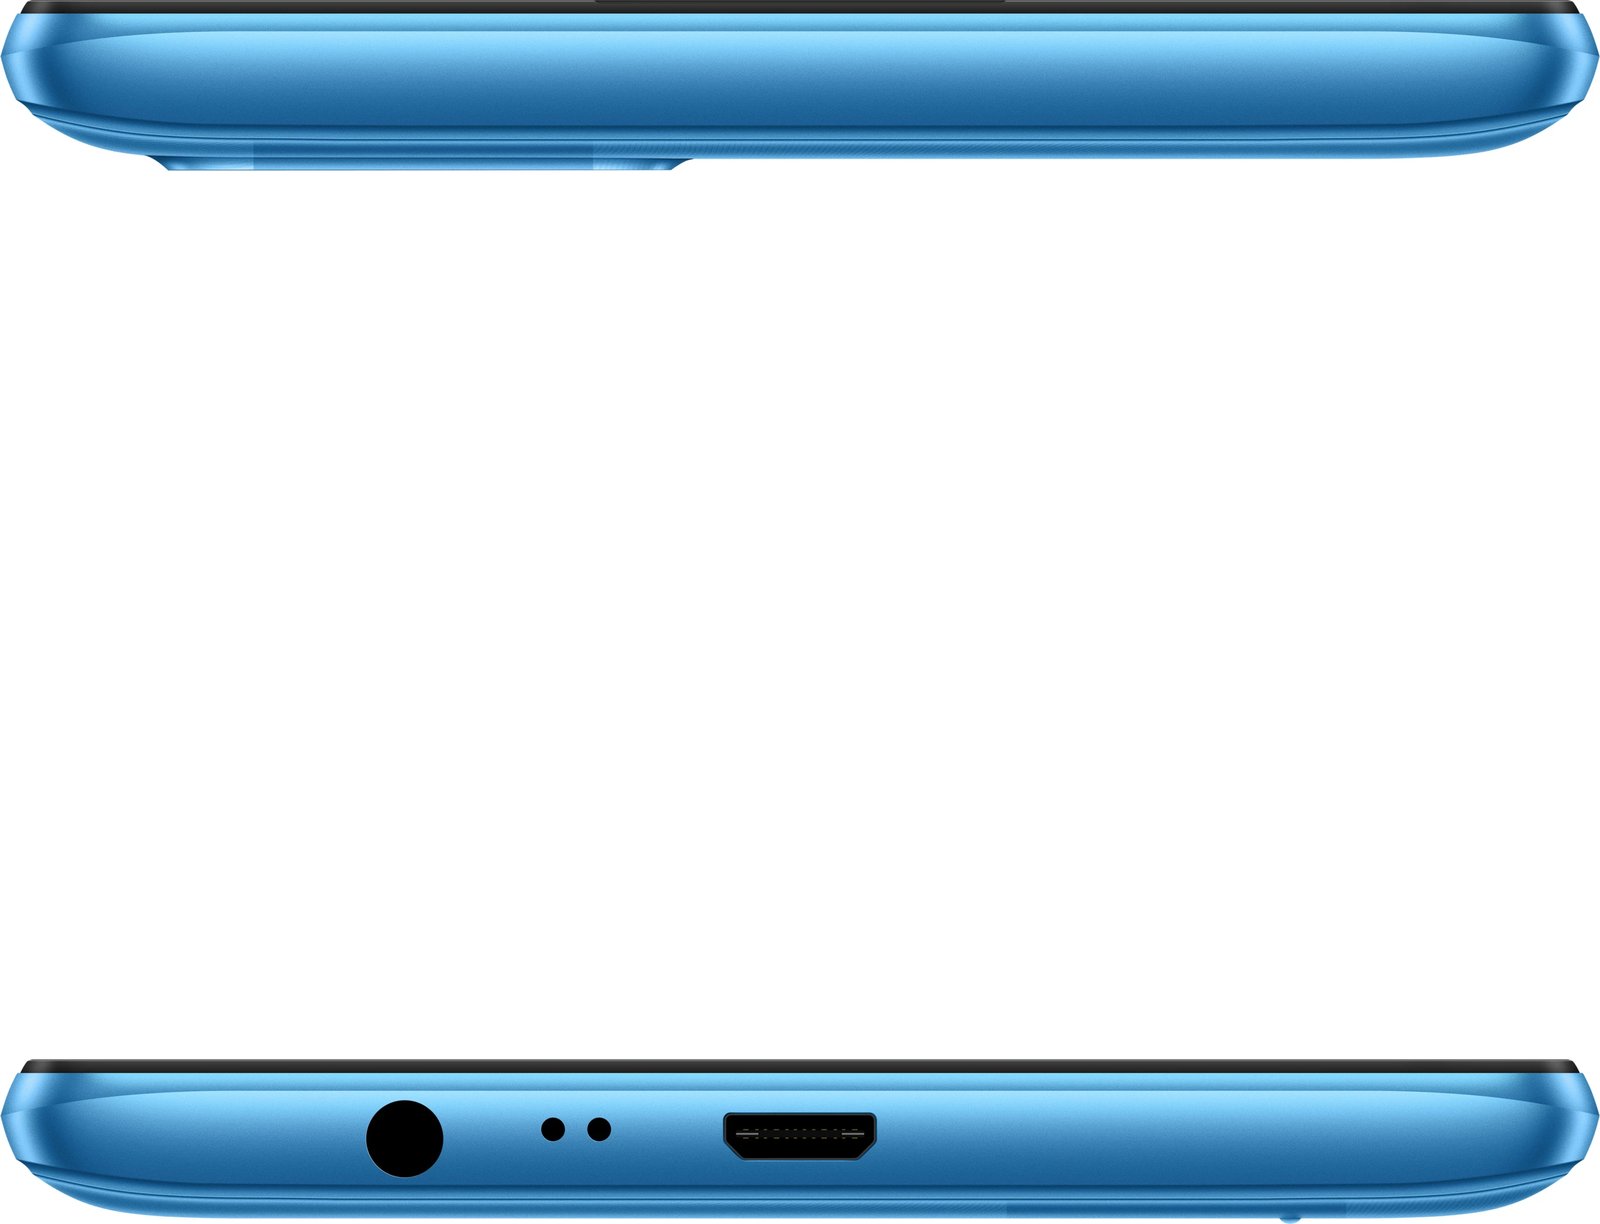 Celular Realme C25Y, 4+128 GB, 4G, i kaltër